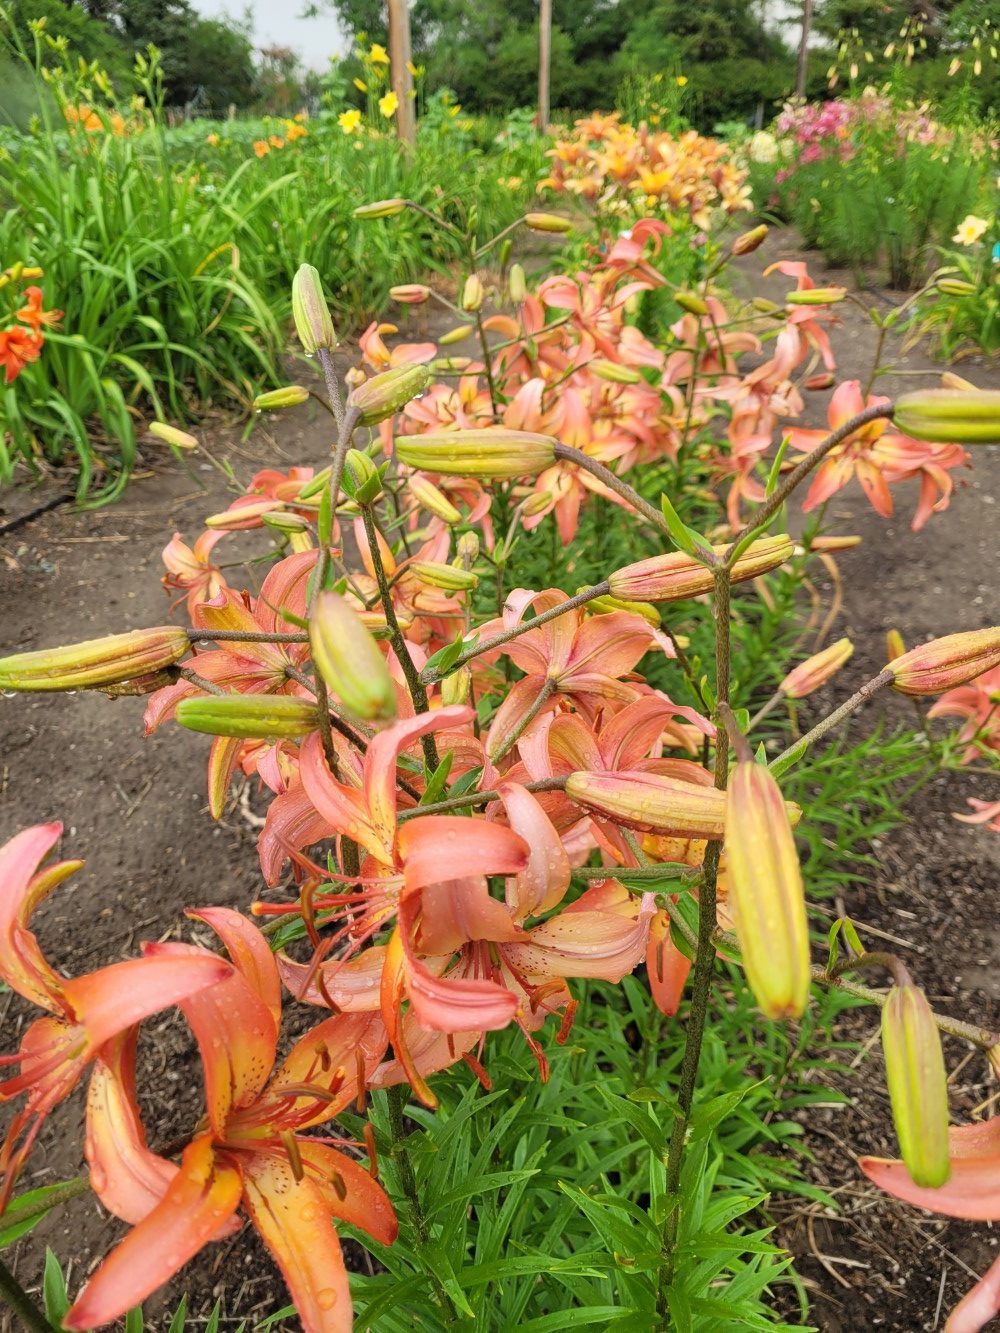 Peach Melba Lily from Lilyfield Farm zone 2 Asiatic lily bulb